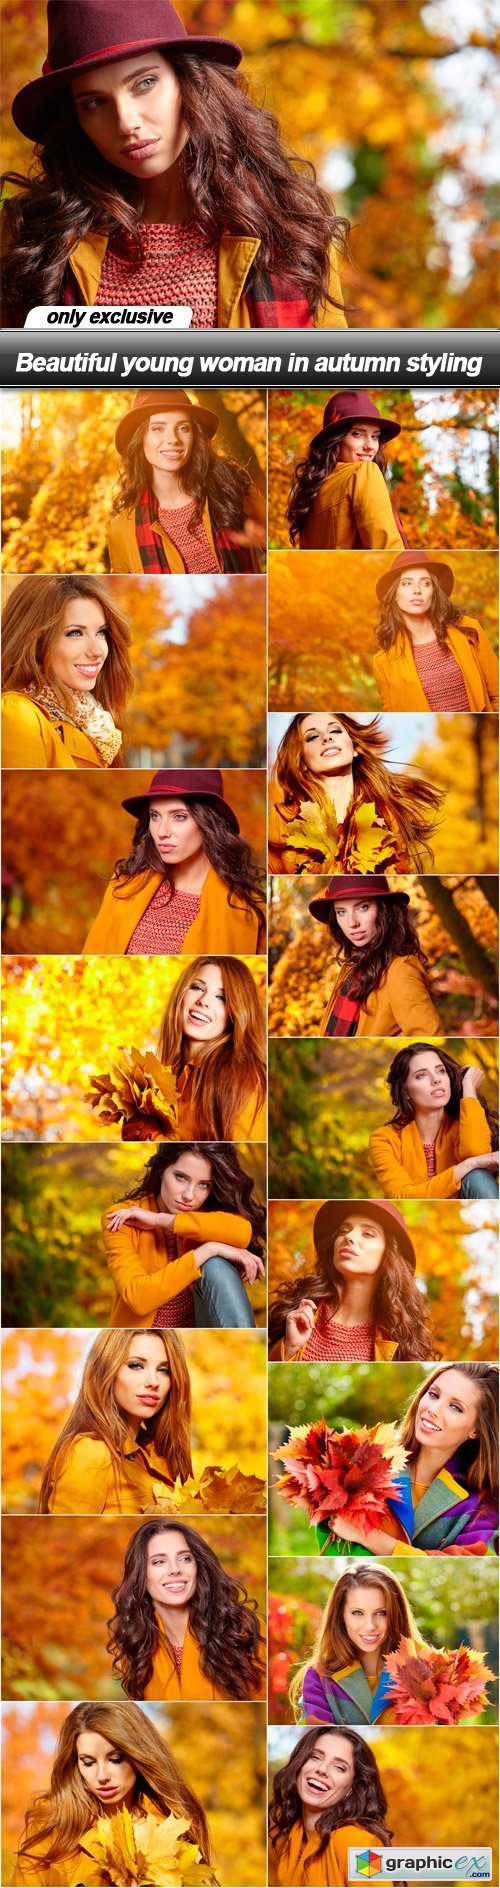 Beautiful young woman in autumn styling - 18 UHQ JPEG